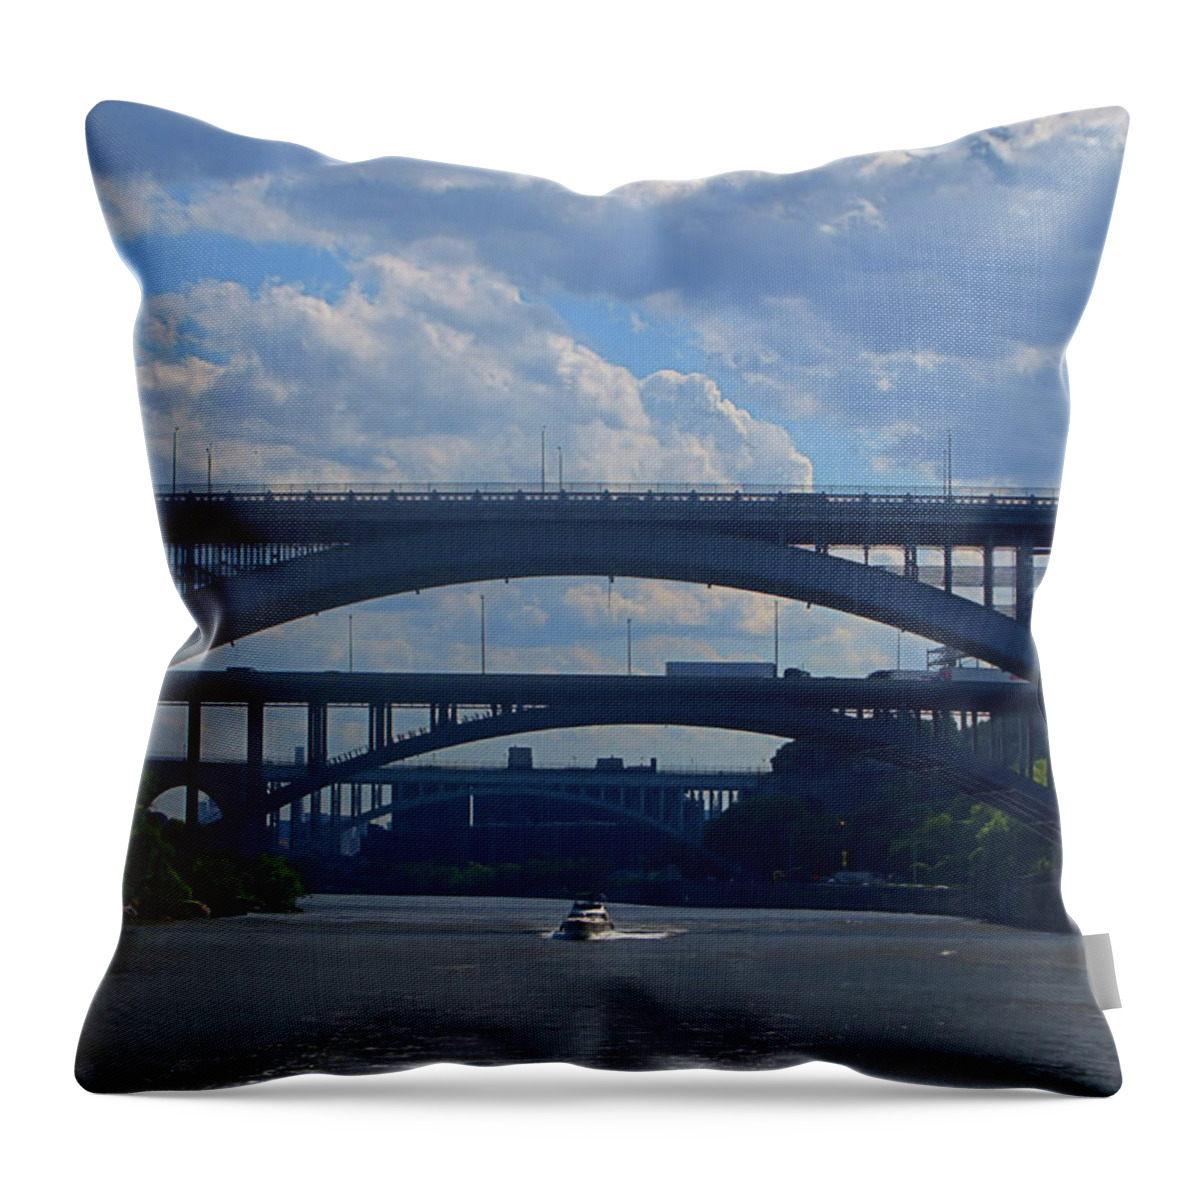 Triborough Bridge Throw Pillow featuring the photograph Three Bridges by Newwwman